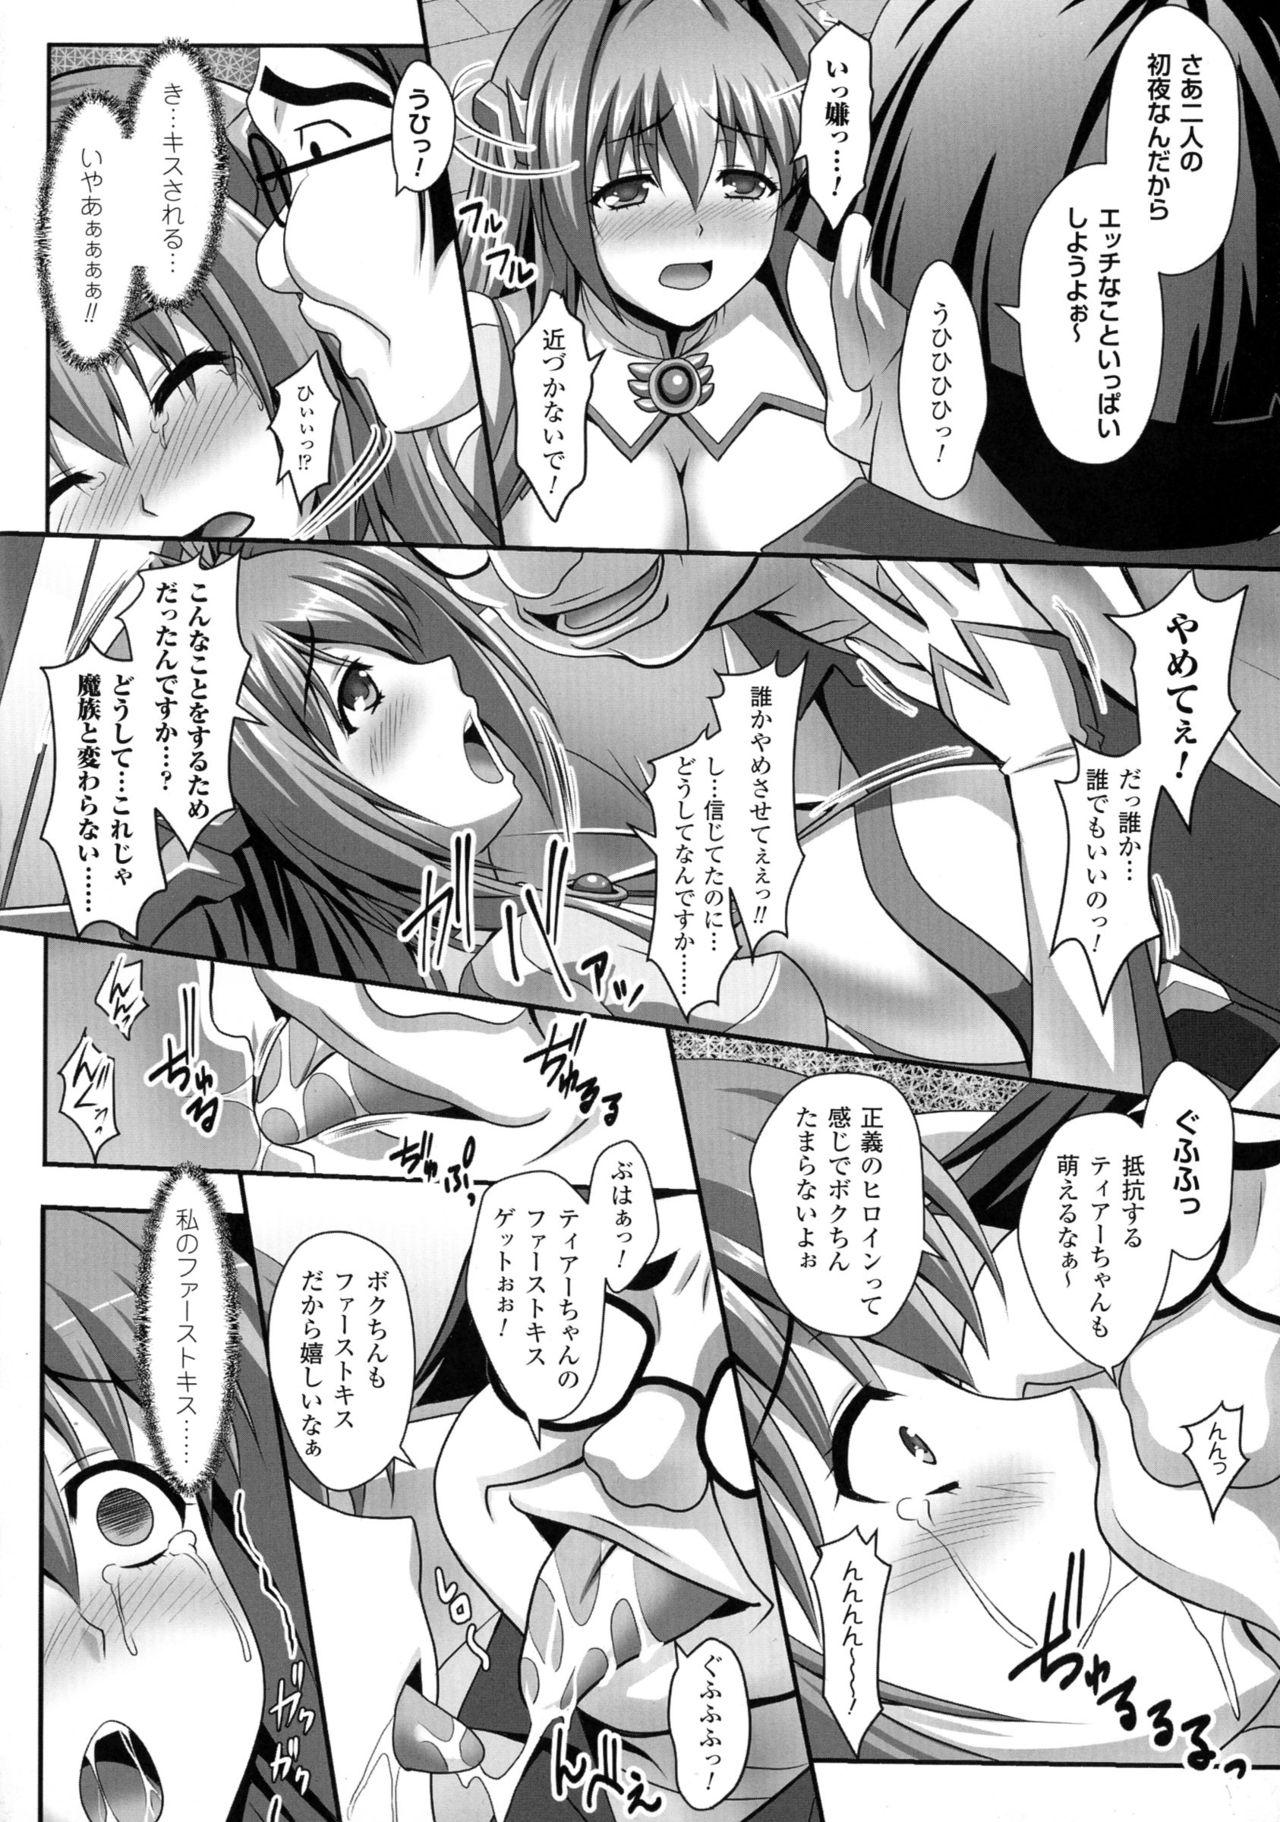 Seigi no Heroine Kangoku File DX Vol. 3 13